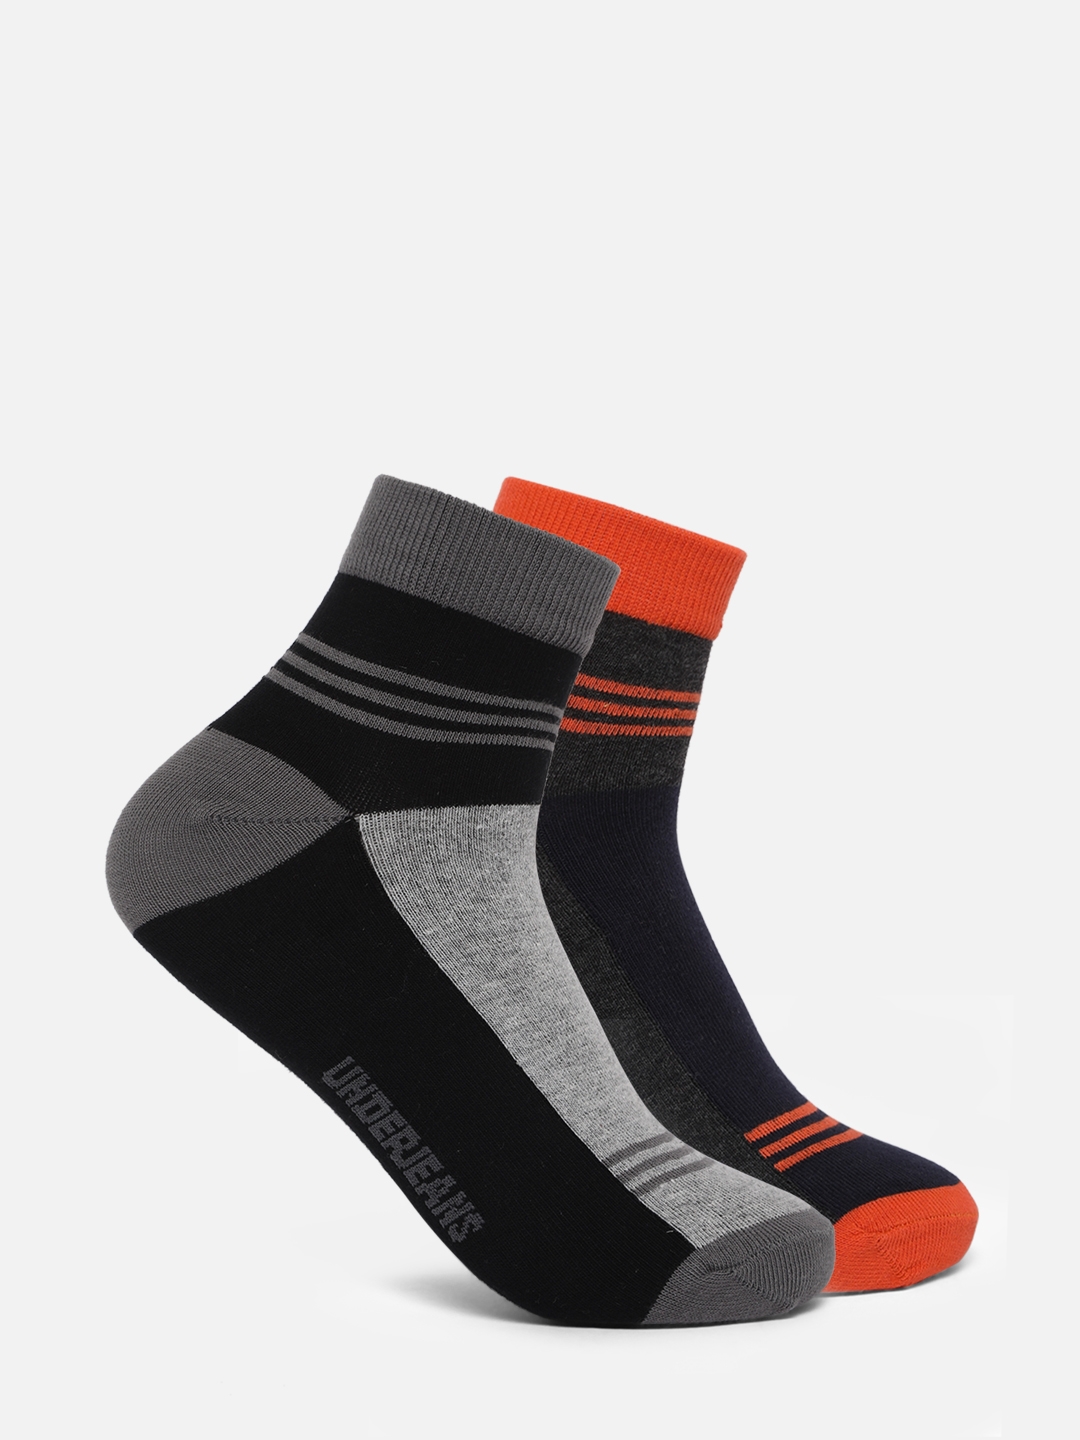 spykar | Underjeans Men Assorted Ankle length (Non terry) Socks Pack of 2 0